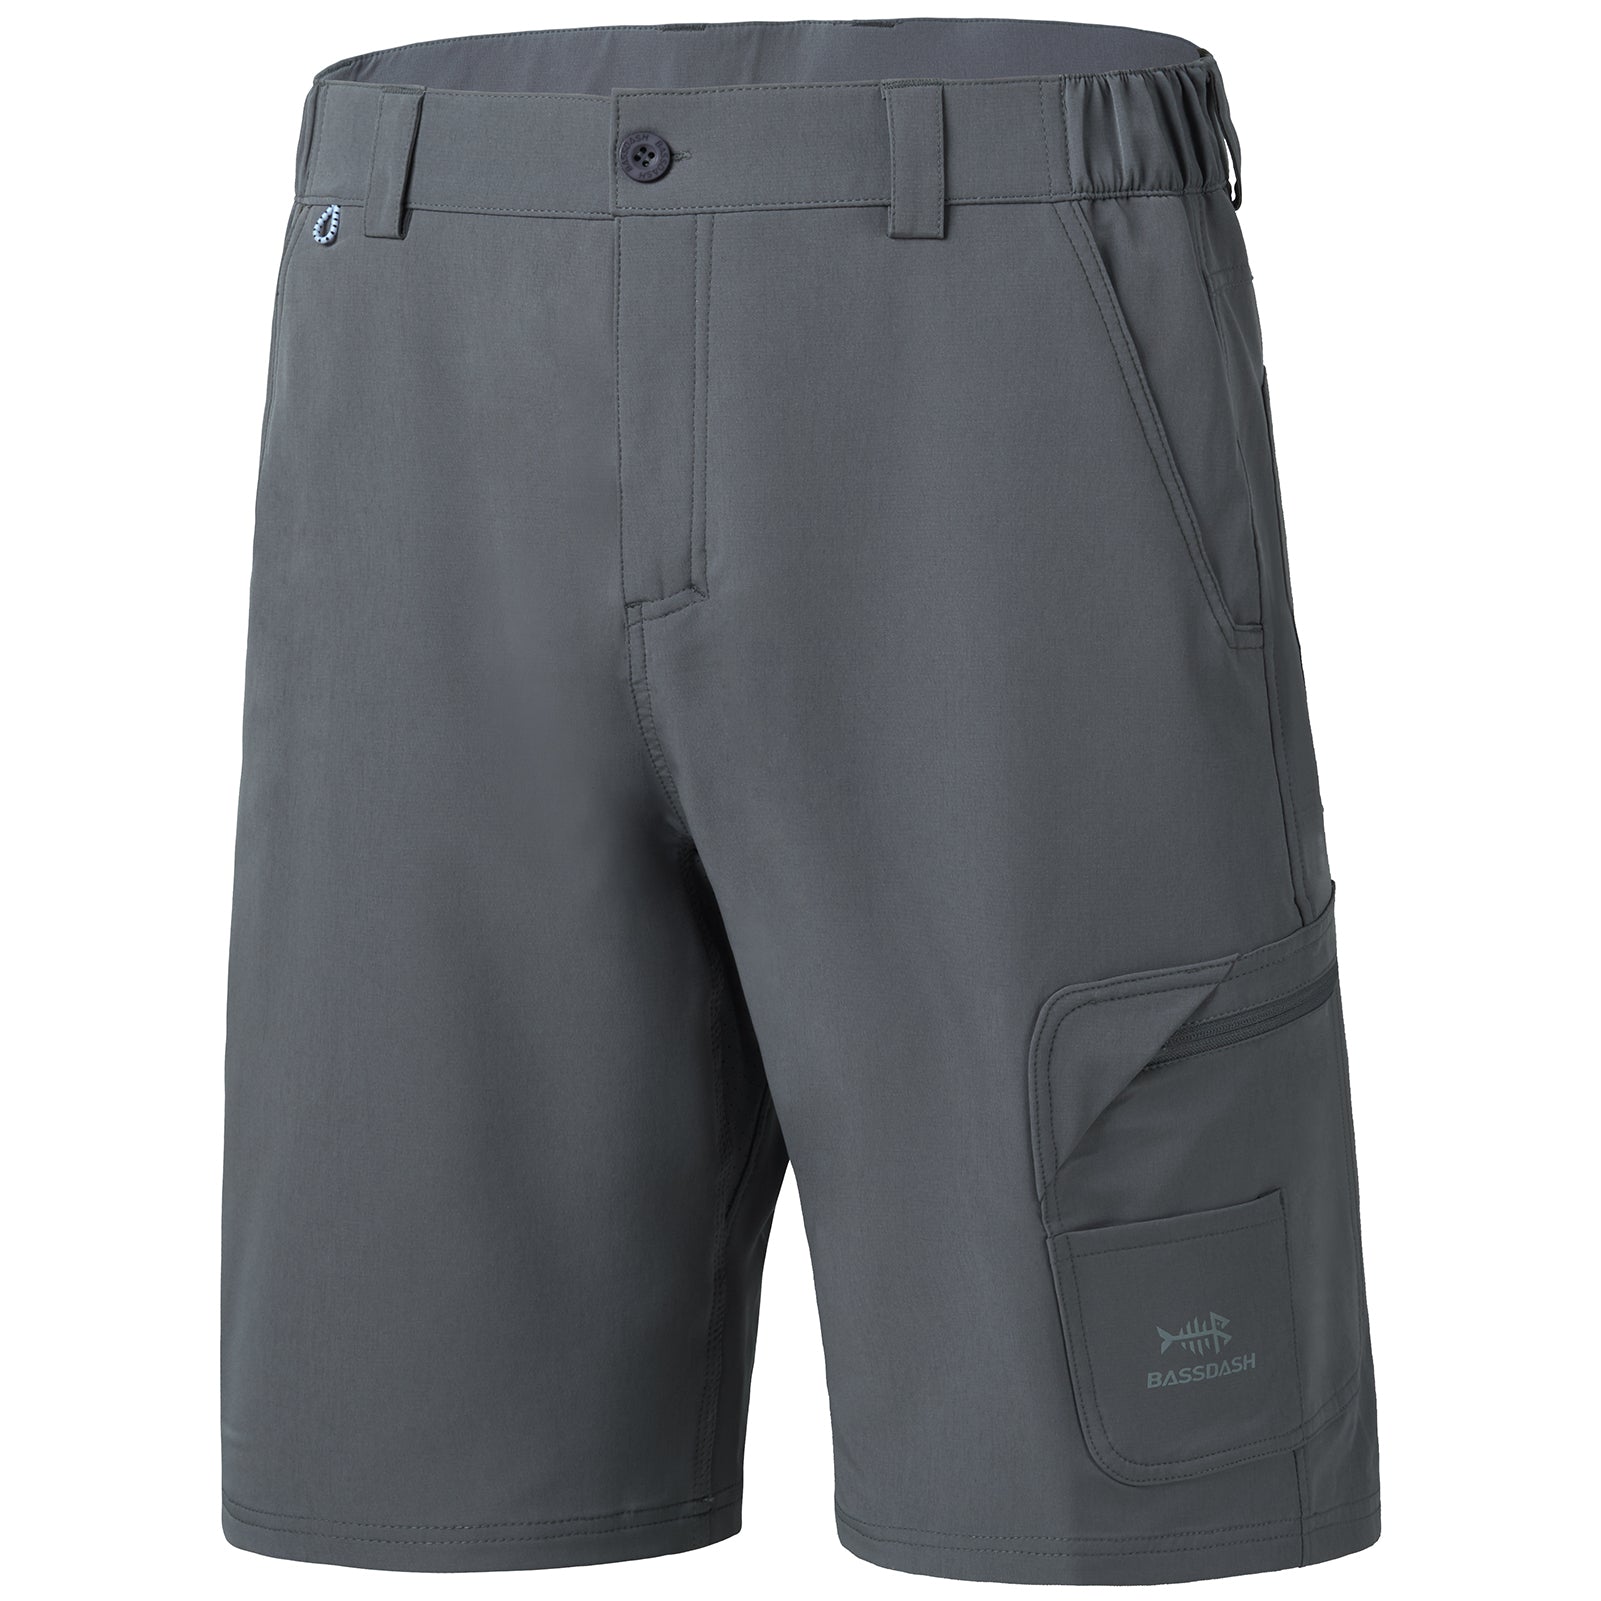 Zeceouar Cargo Shorts For Men With Pockets Men Hiking Fishing Cargo Shorts  Lightweight Quick Dry Outdoor Travel Shorts for Men Fishing Camping Knee  Length Zipper Work Shorts 